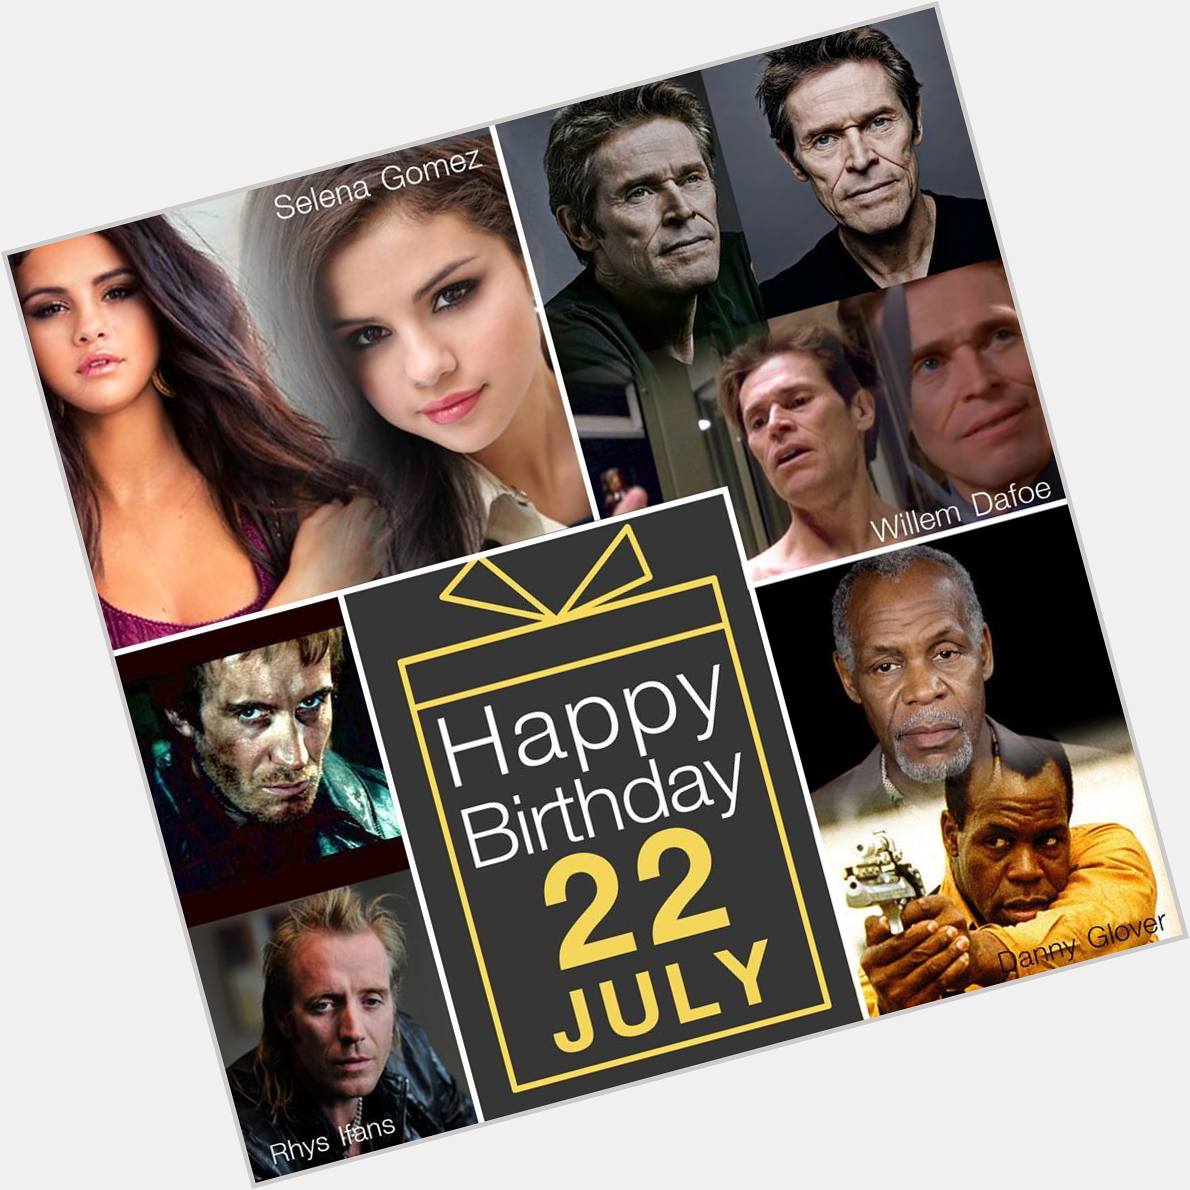 22 July Happy Birthday
- Willem Dafoe
- Selena Gomez
- Danny Glover
- Rhys Ifans 